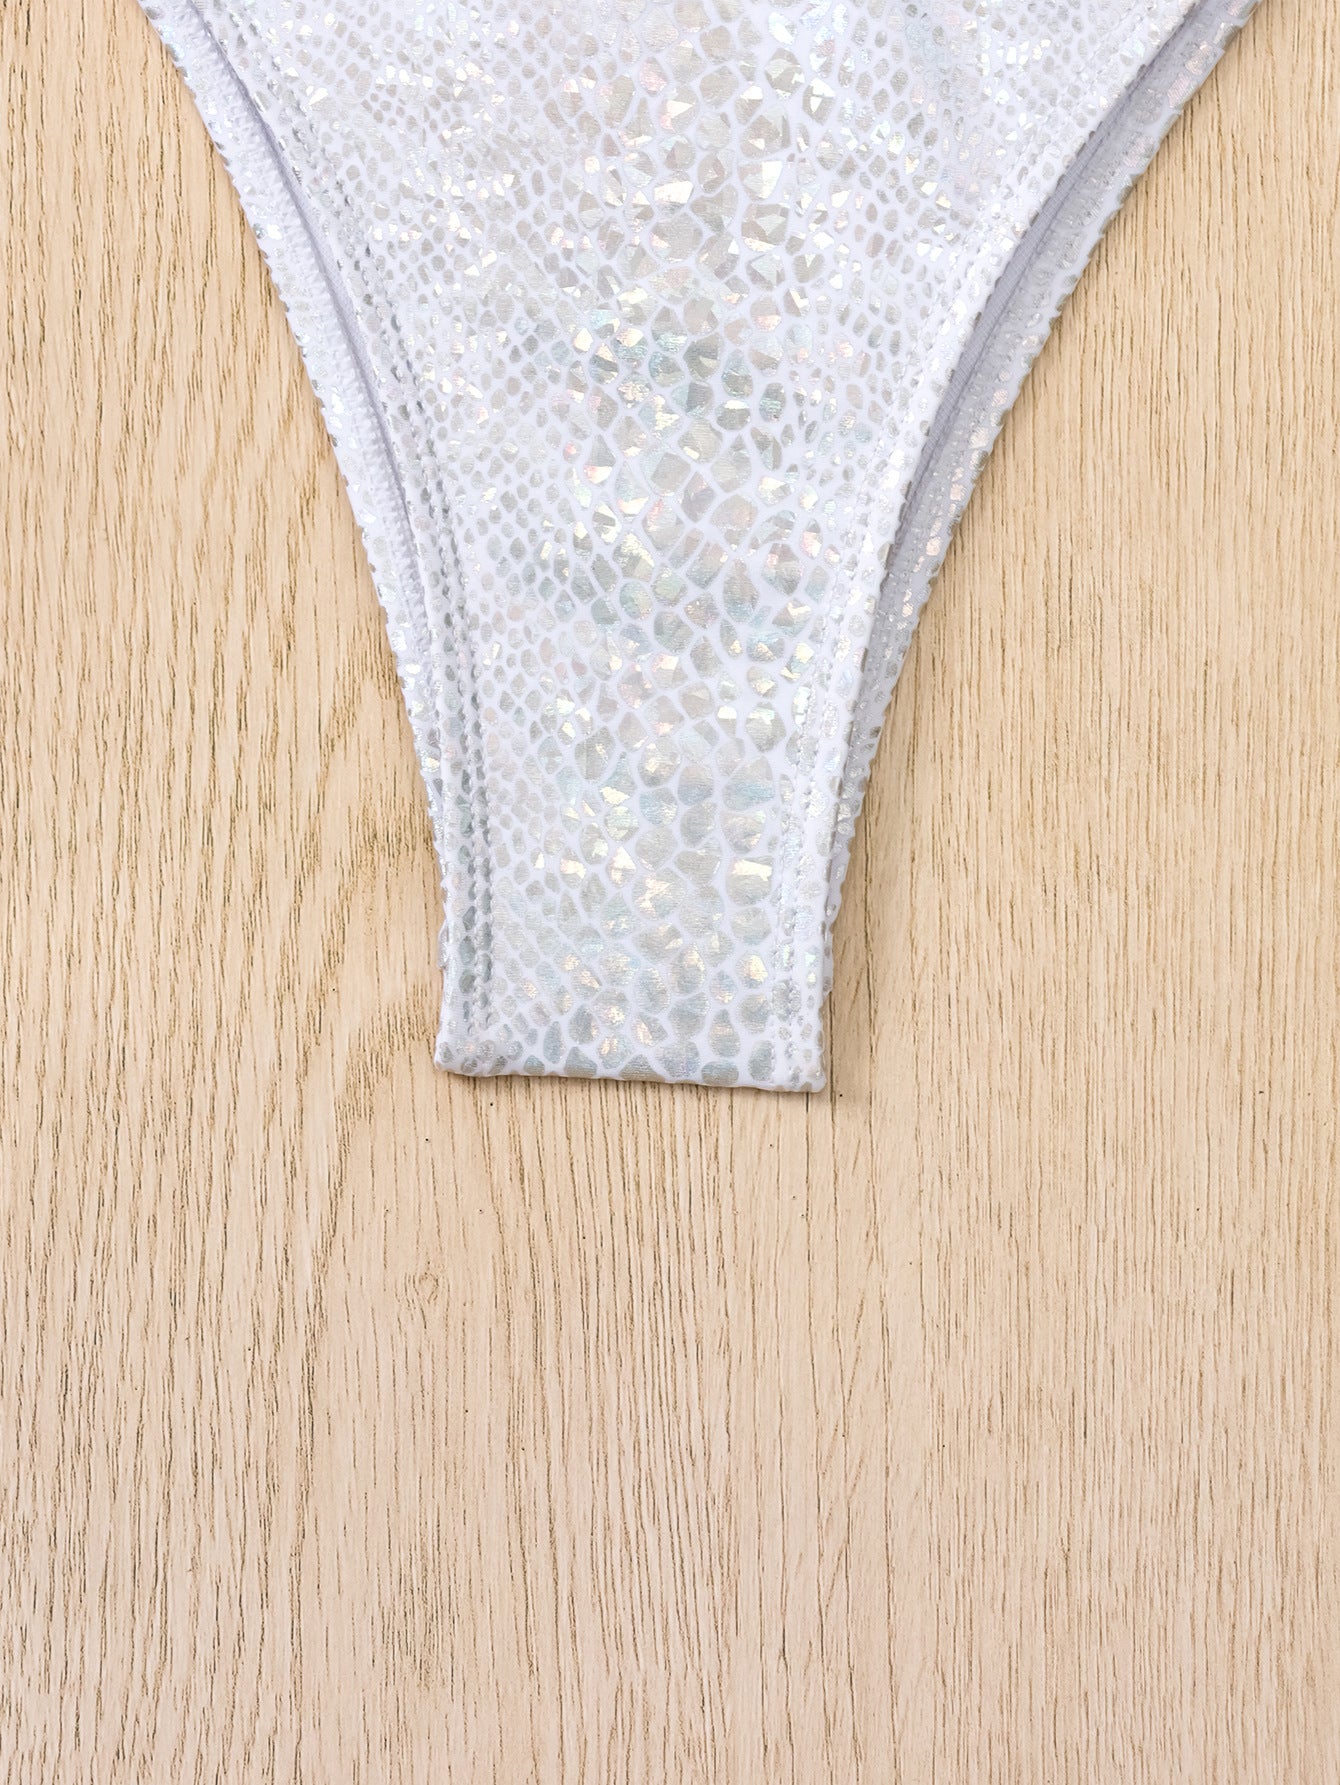 Mermaid core Swimwear | Silver Glitter Iridescent Triangle Halter Bikini Swimsuit